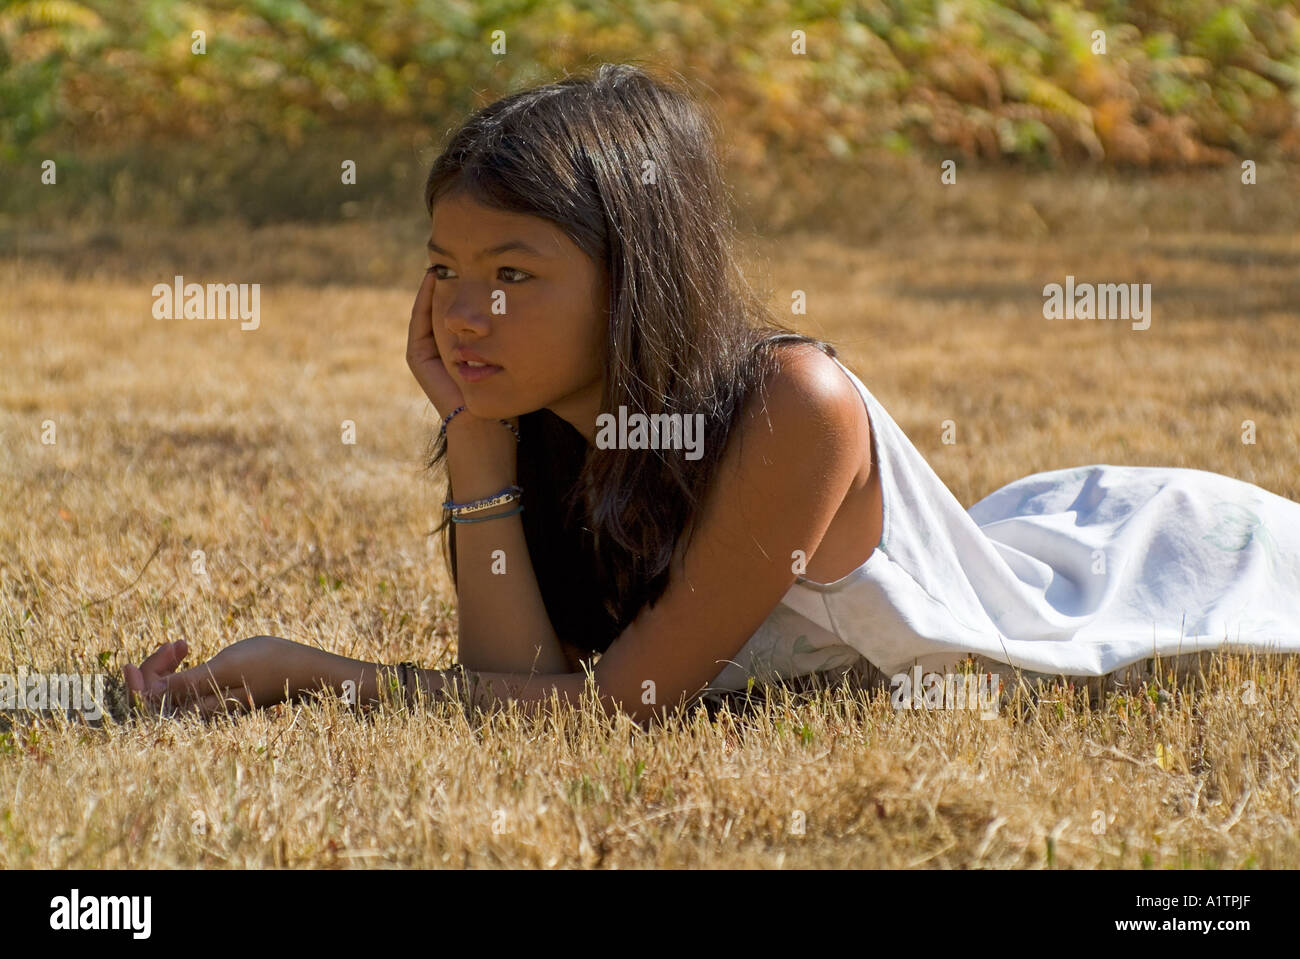 Young teenage girl thinking / thoughtful portrait Stock Photo